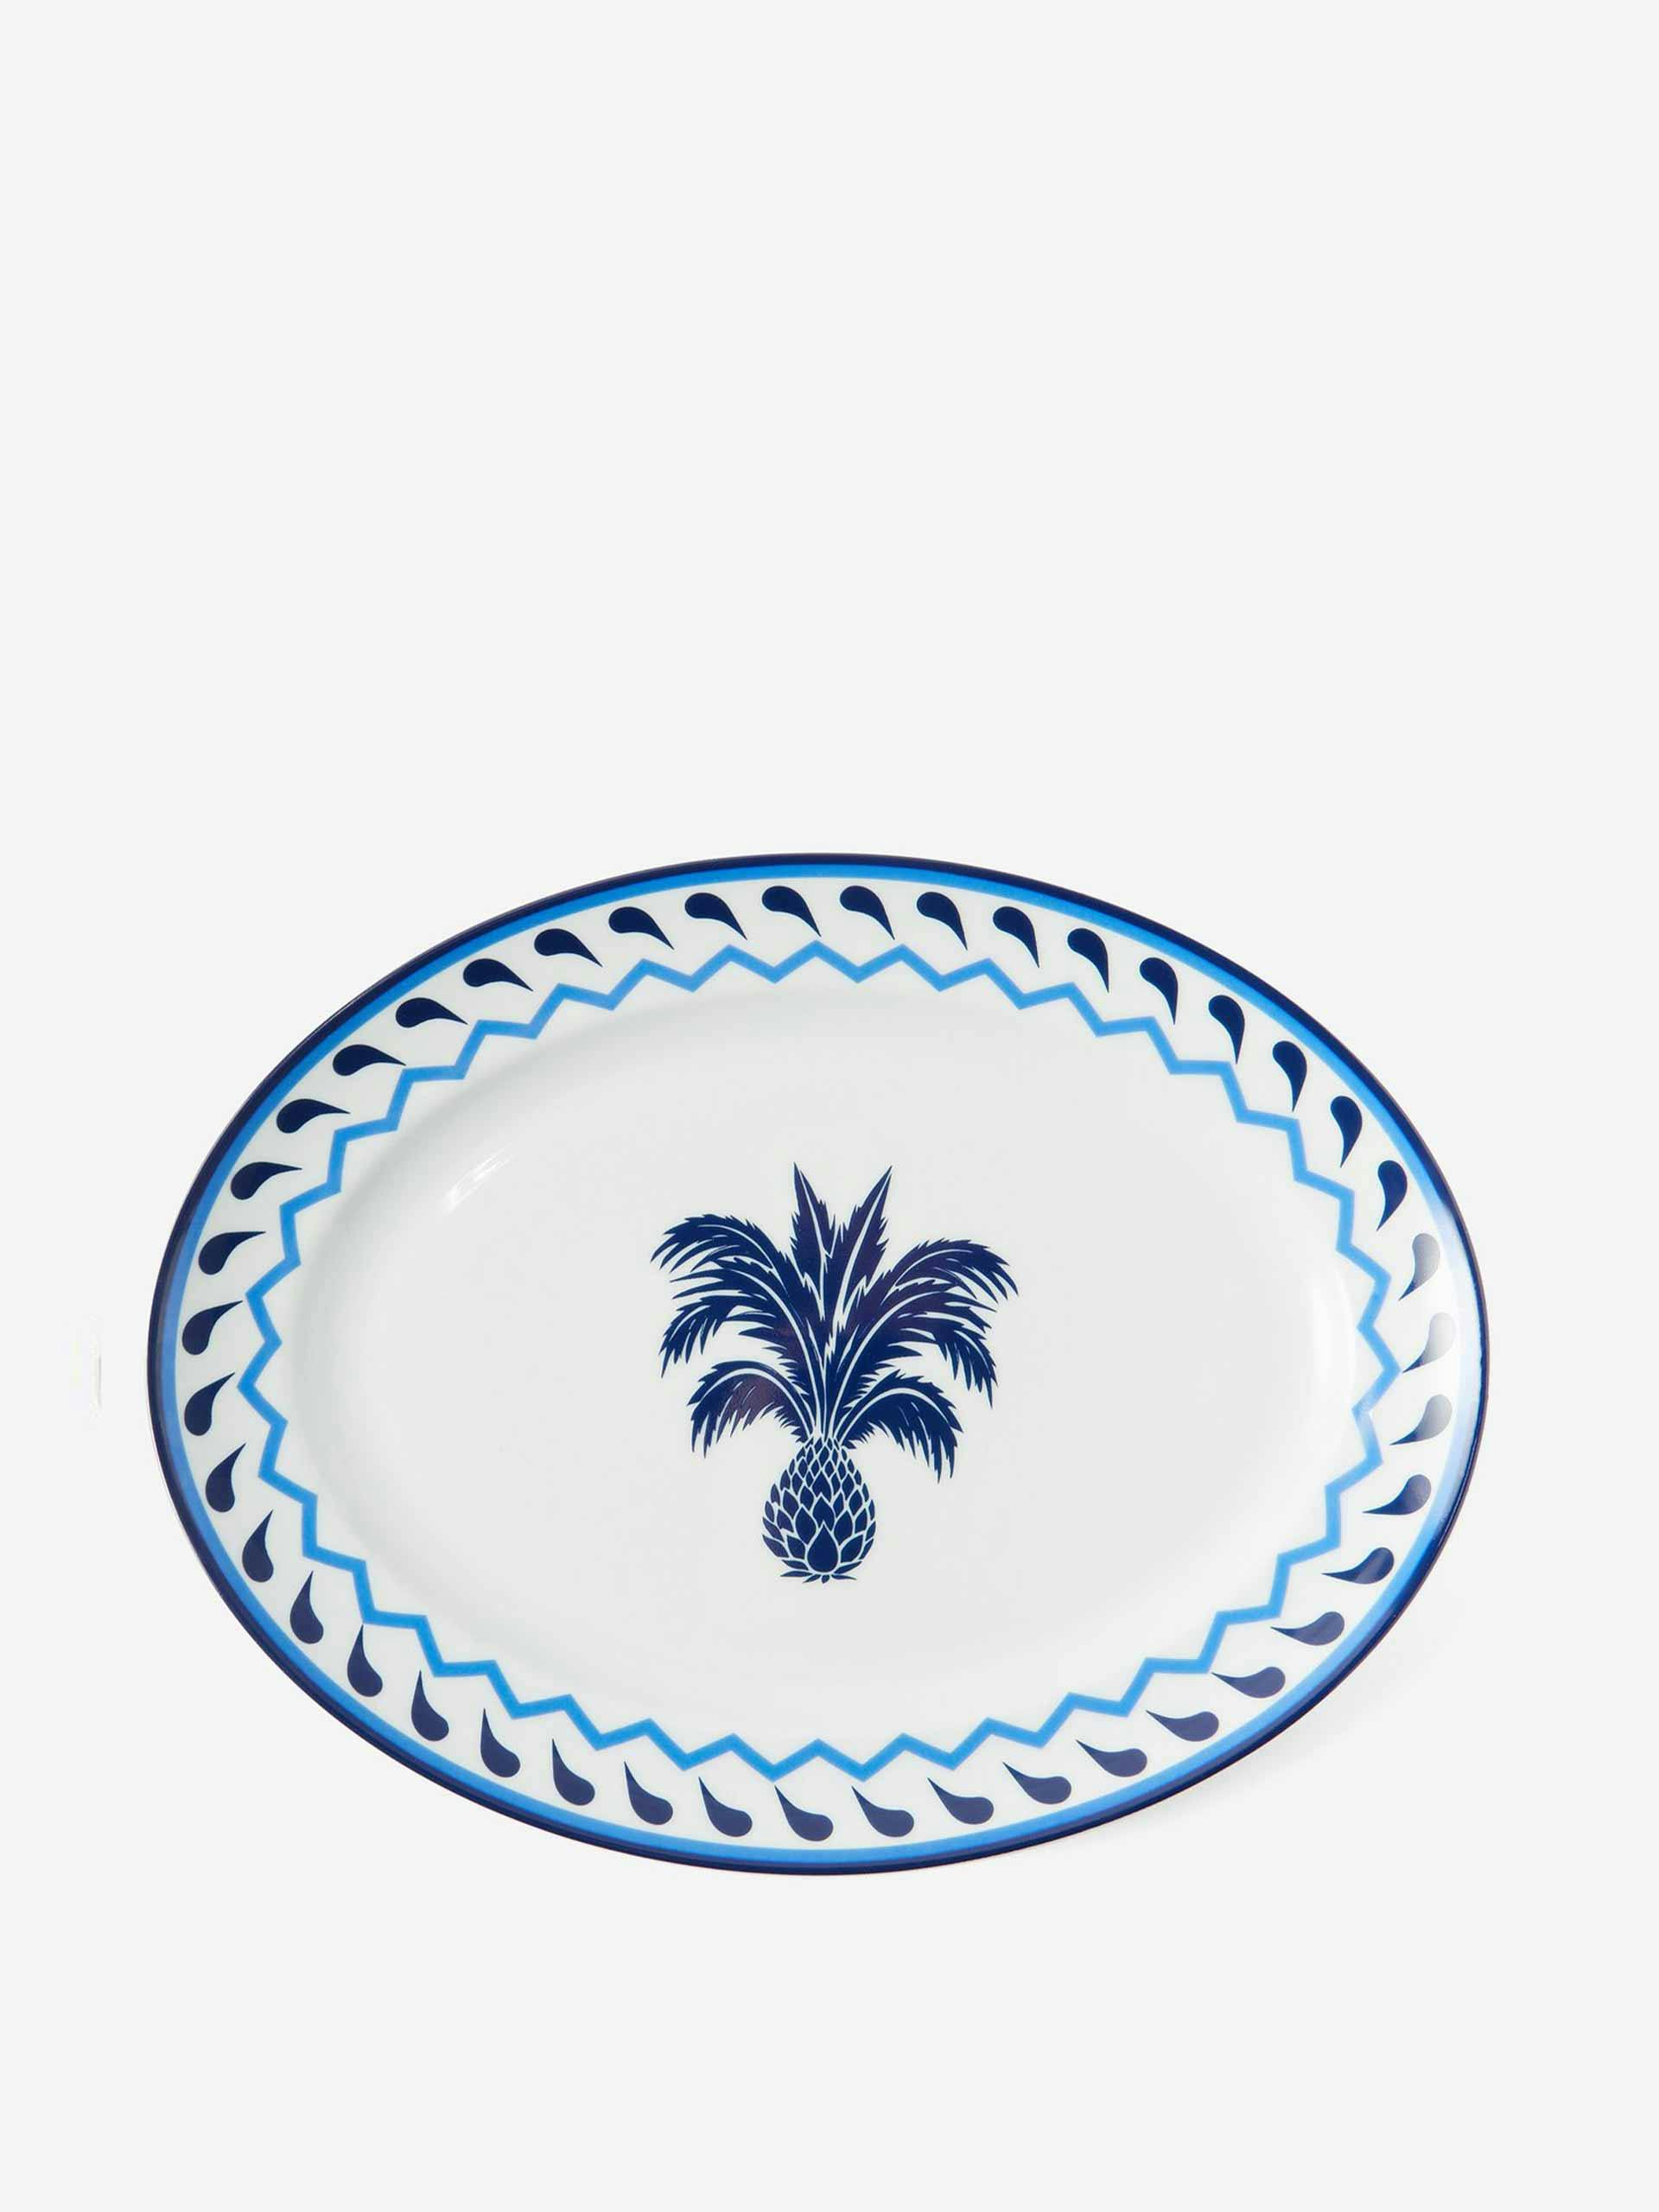 Hand-painted porcelain oval platter